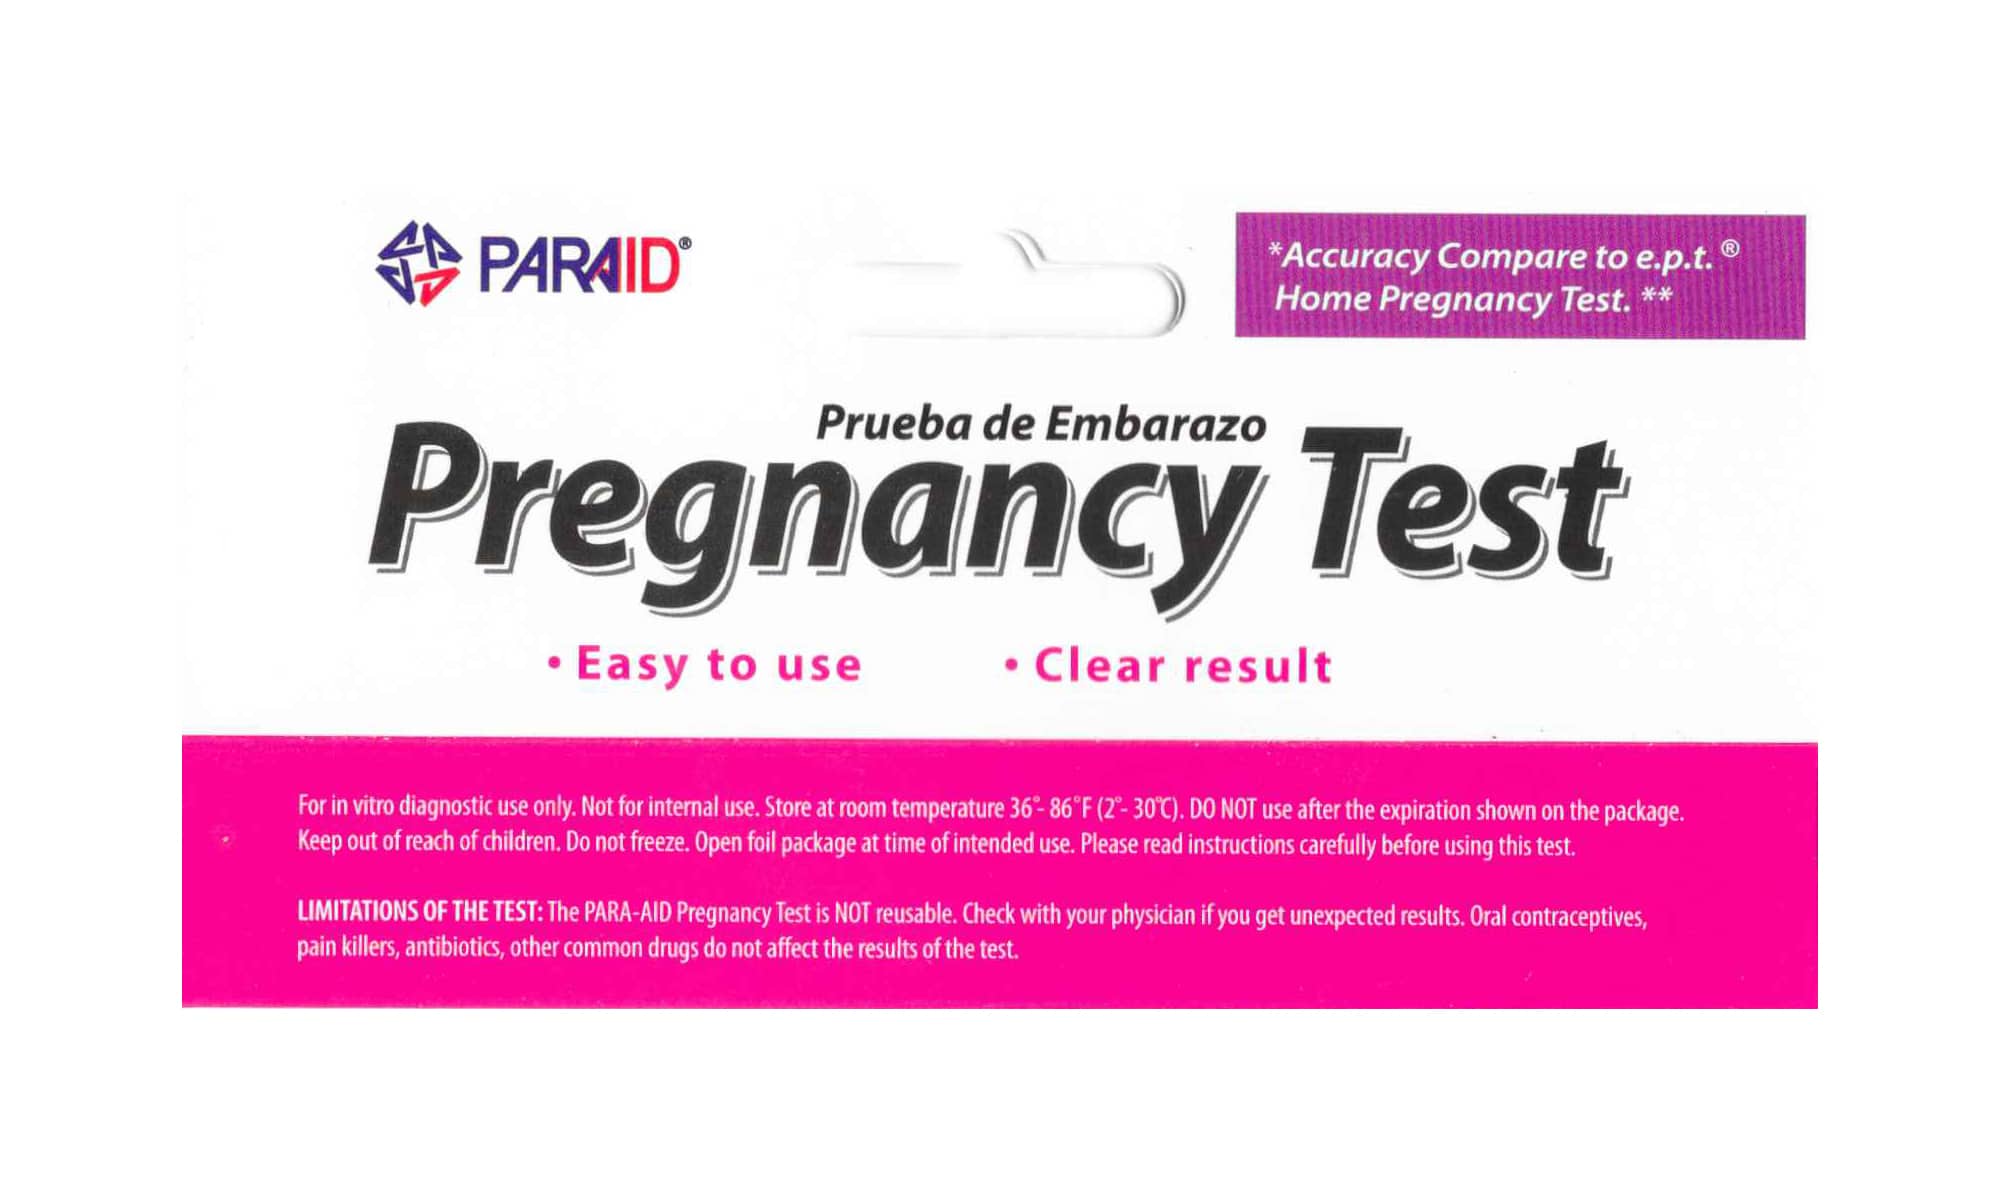 paraid pregnancy test faint line